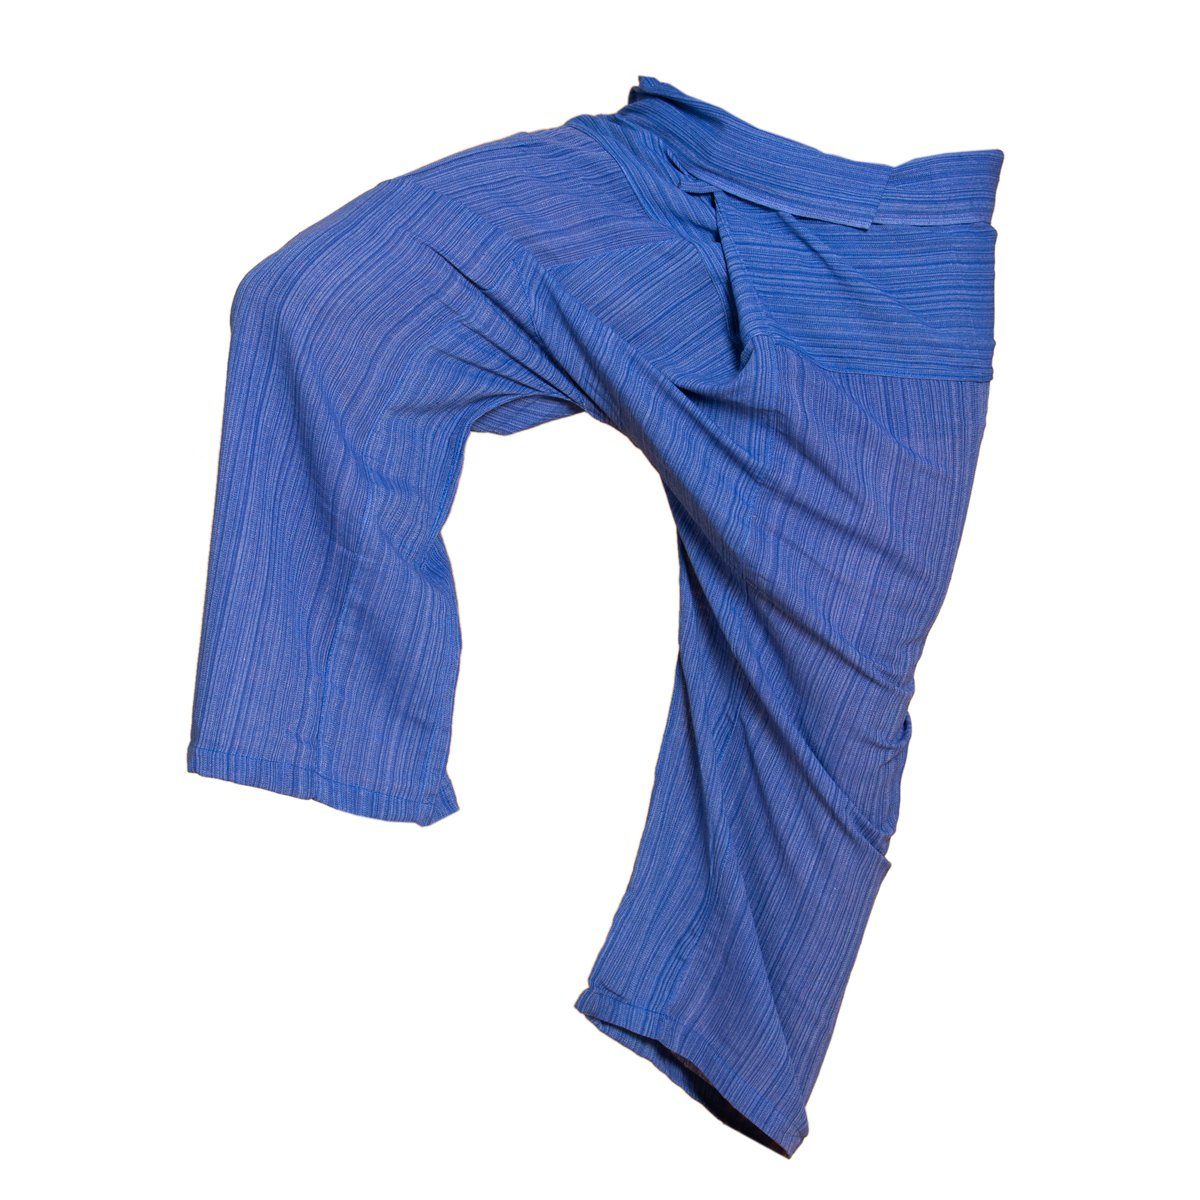 PANASIAM Wellnesshose Thai Fischerhose Lini bequeme Unisex Wickelhose aus Baumwolle als Yogahose Freizeithose Relaxhose loose fit jeans blau